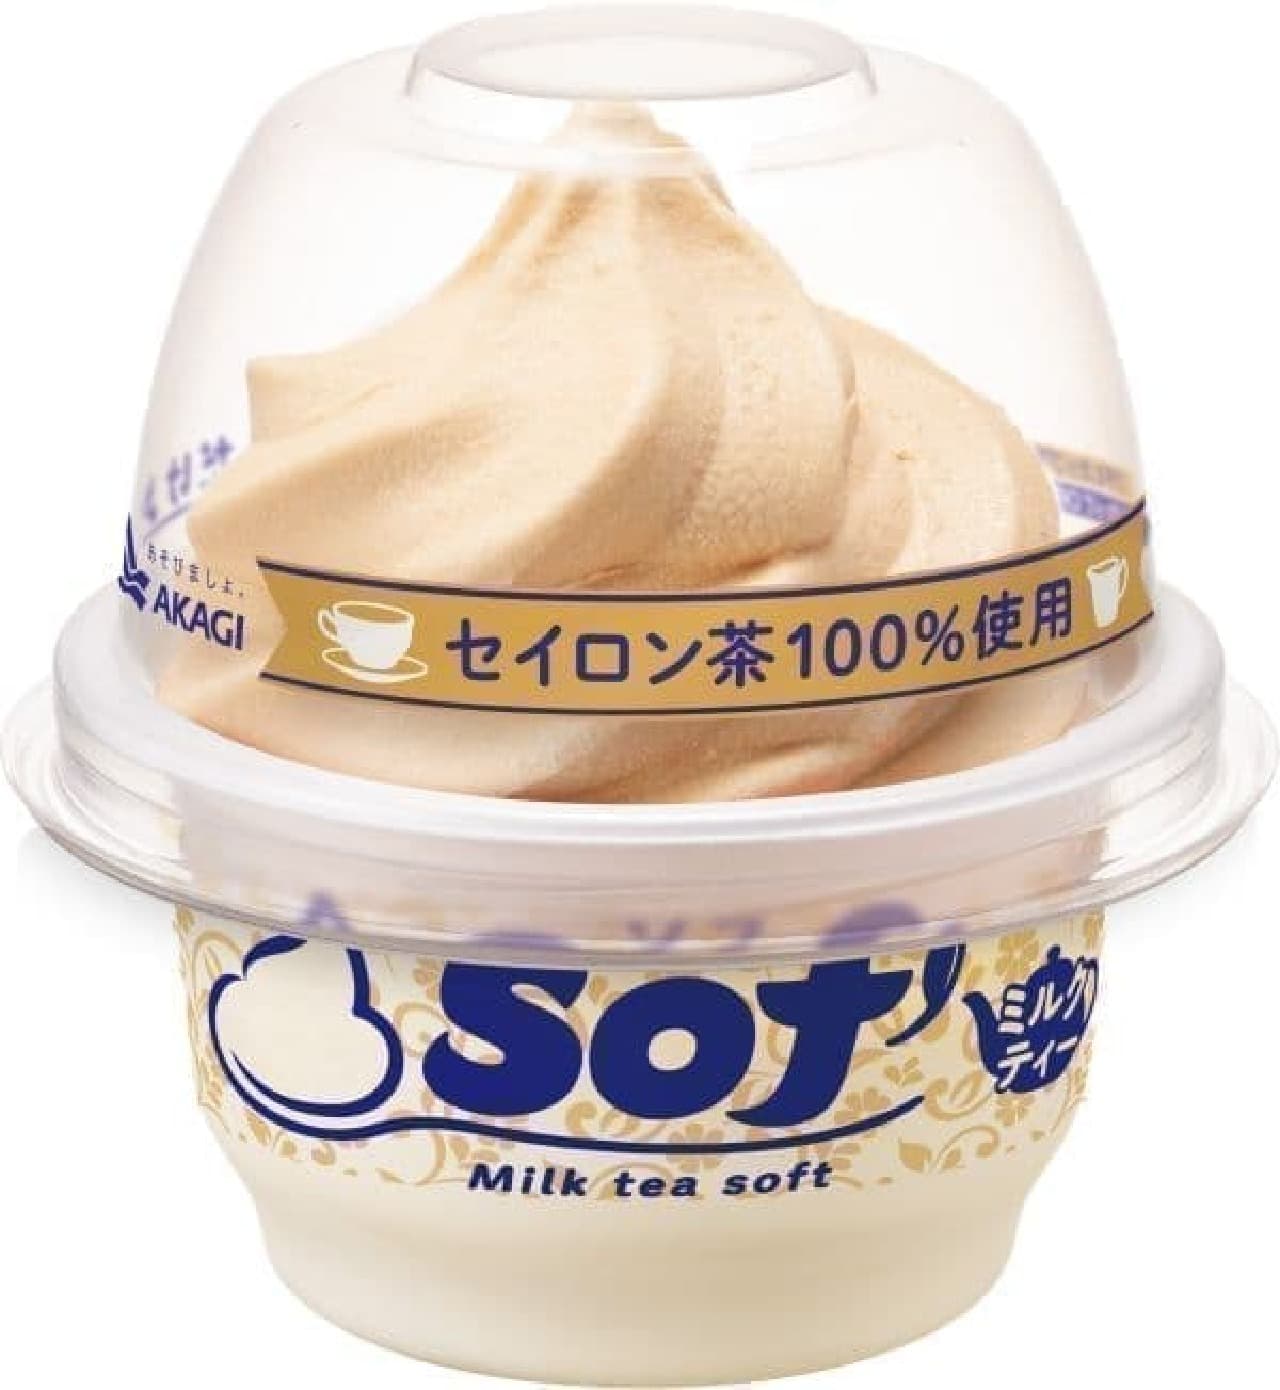 Akagi Nyugyo "Soft Milk Tea"